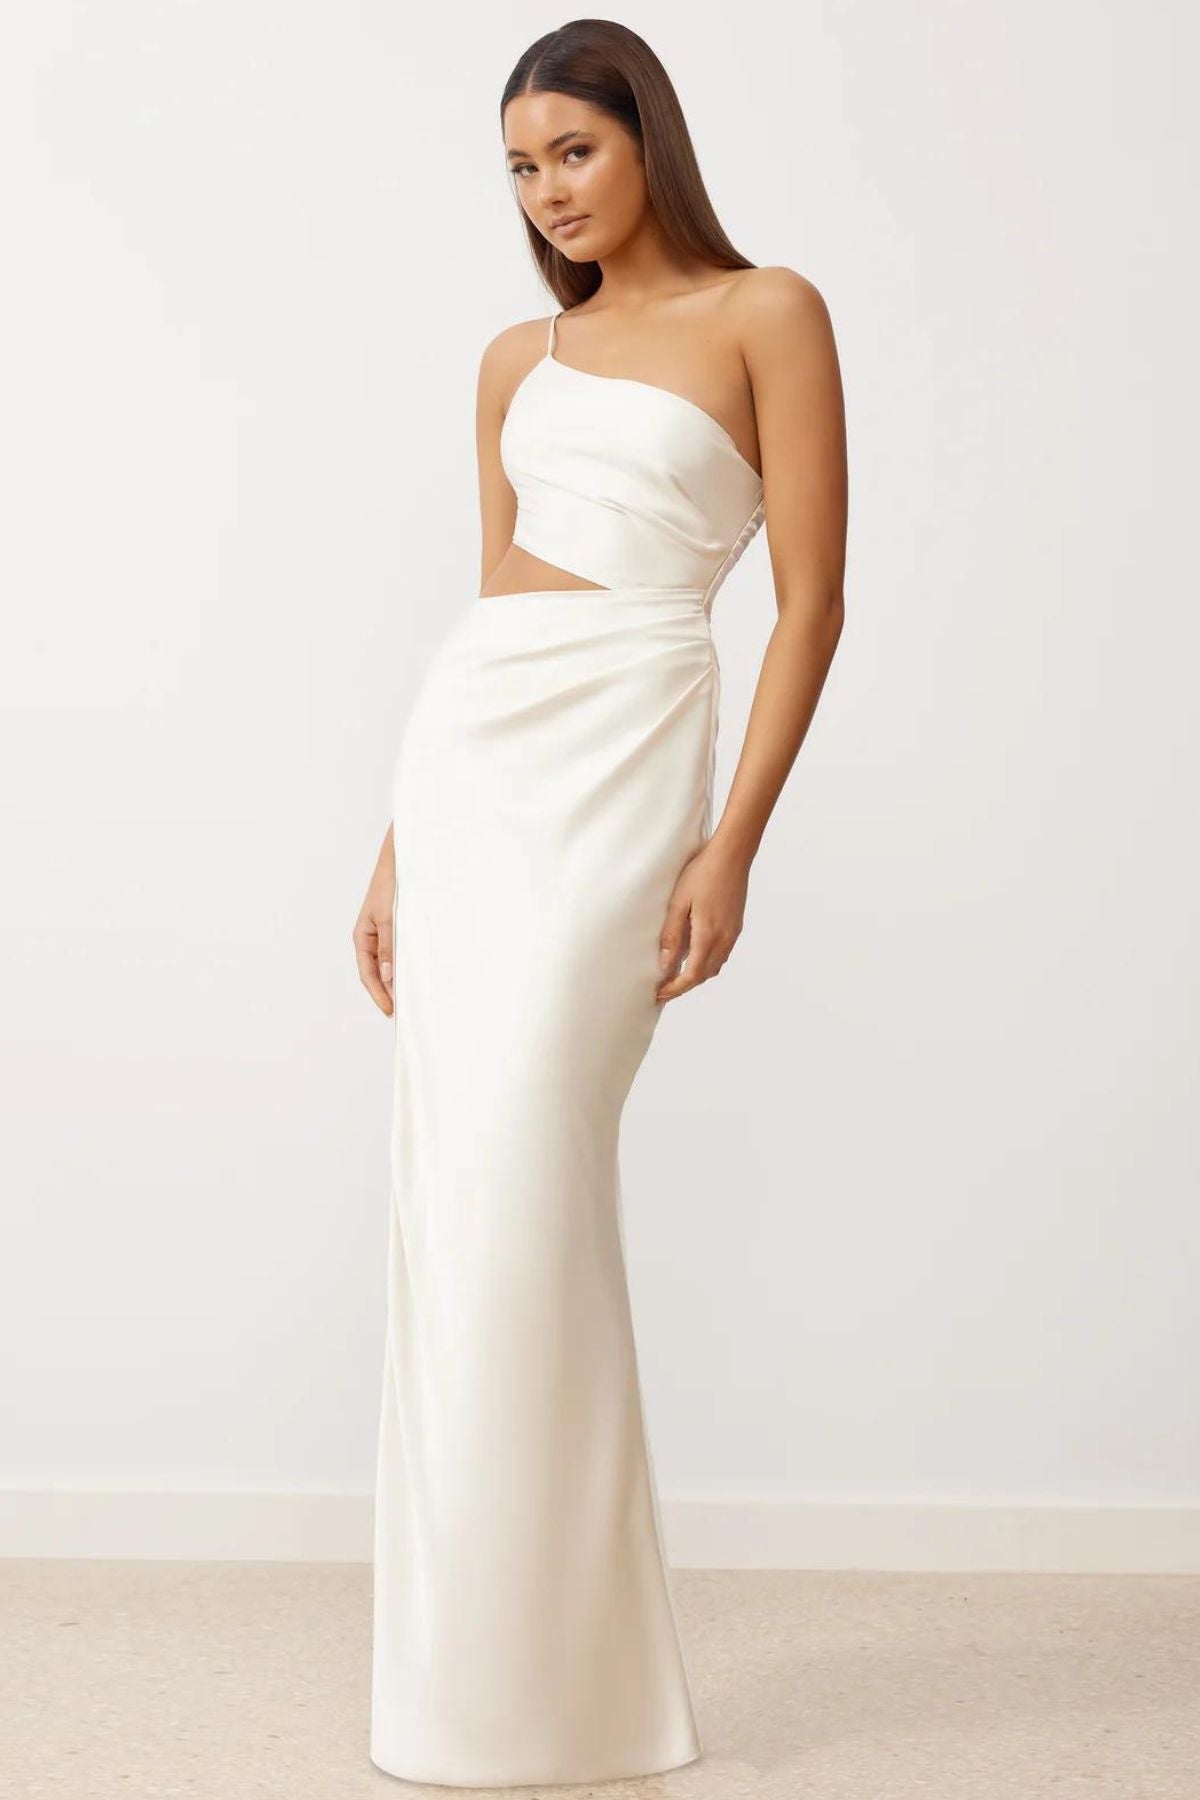 Lexi LEXI Delta Dress (Oyster White) RRP $349 - 5_d6e571e6-8cfa-437b-a7e8-c33991ffd3ca.jpg